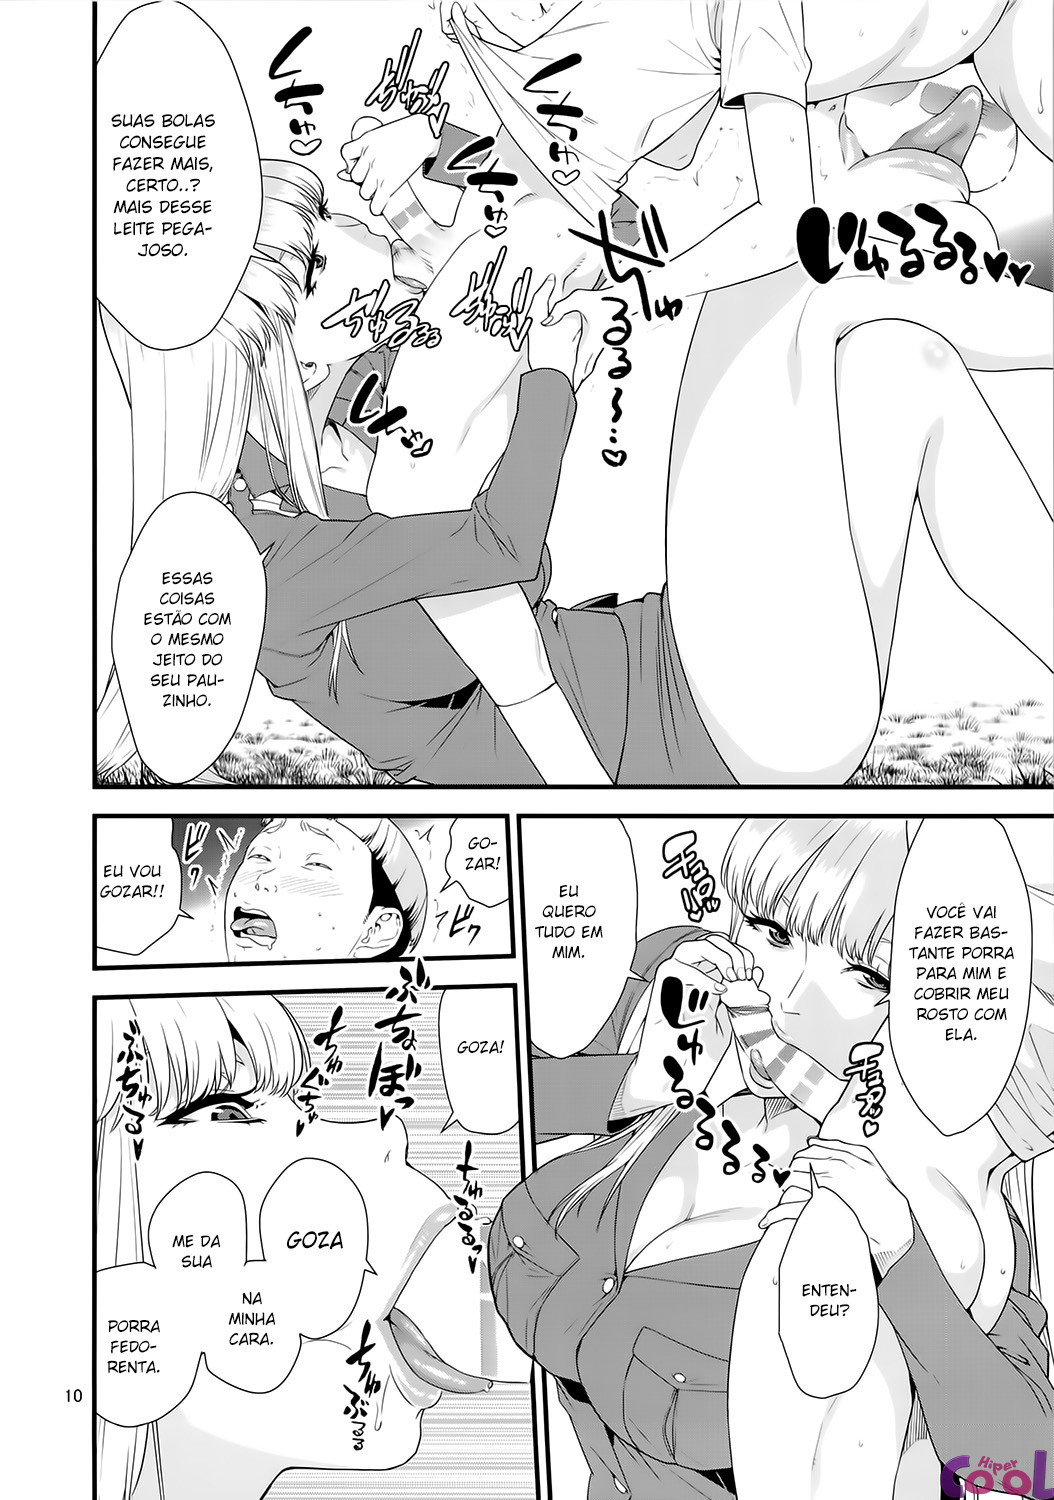 fellatio-queen-reiko-no-nichijou-chapter-01-page-09.jpg